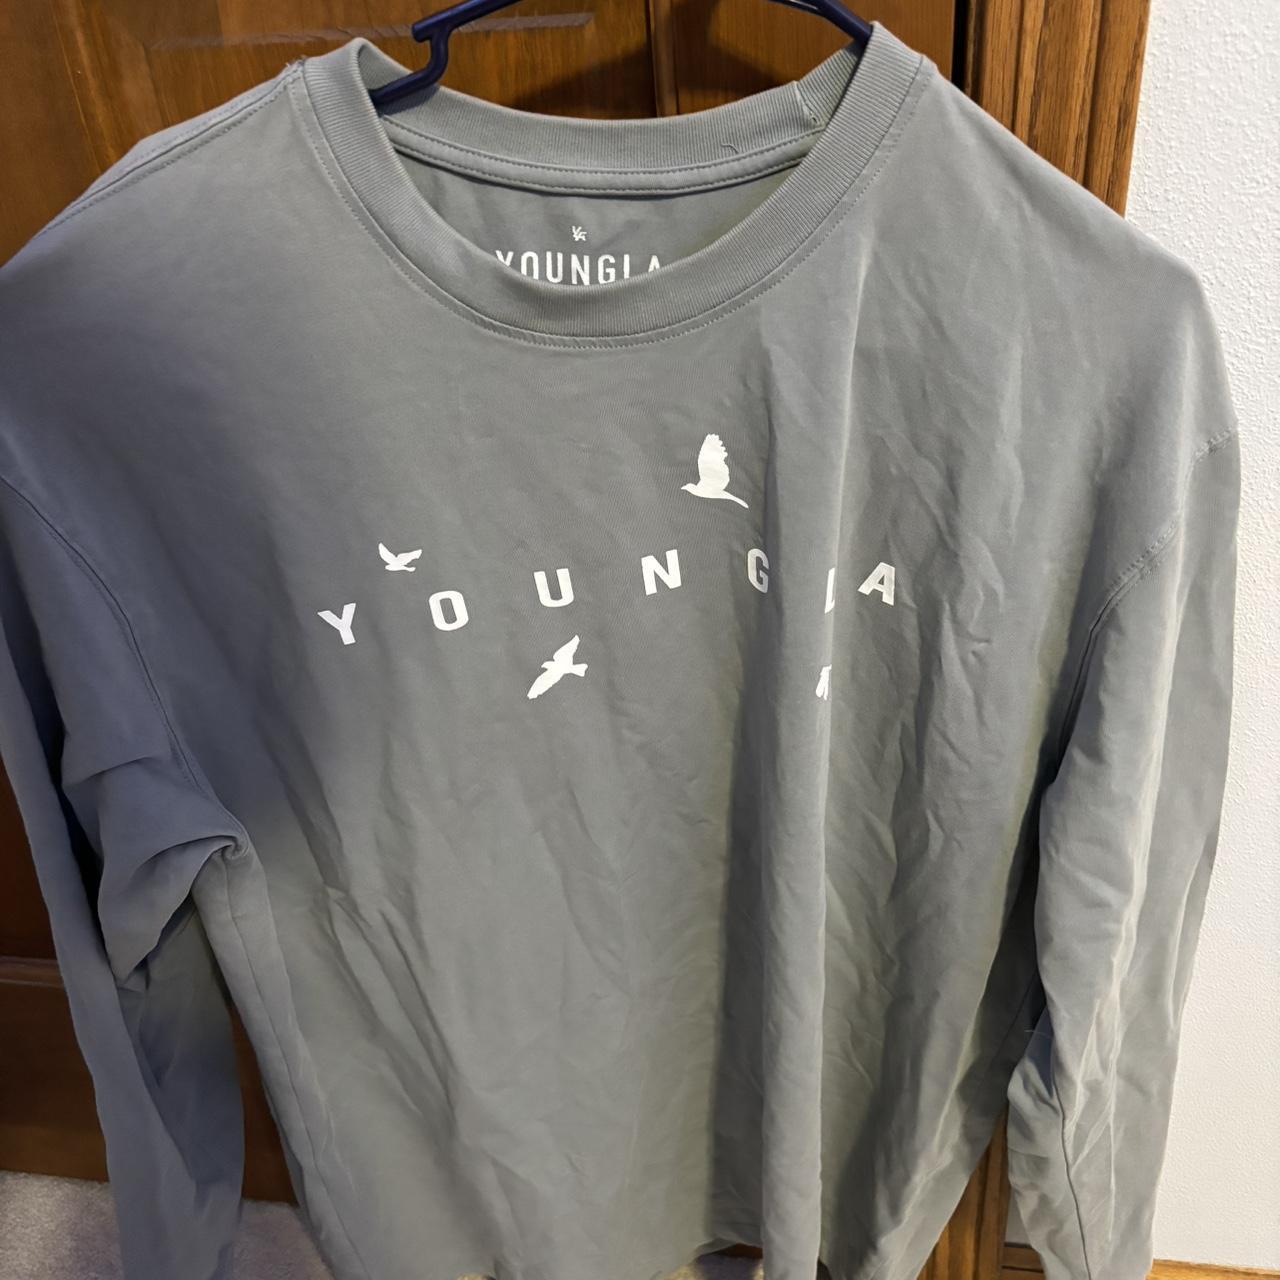 Youngla shirt - Depop